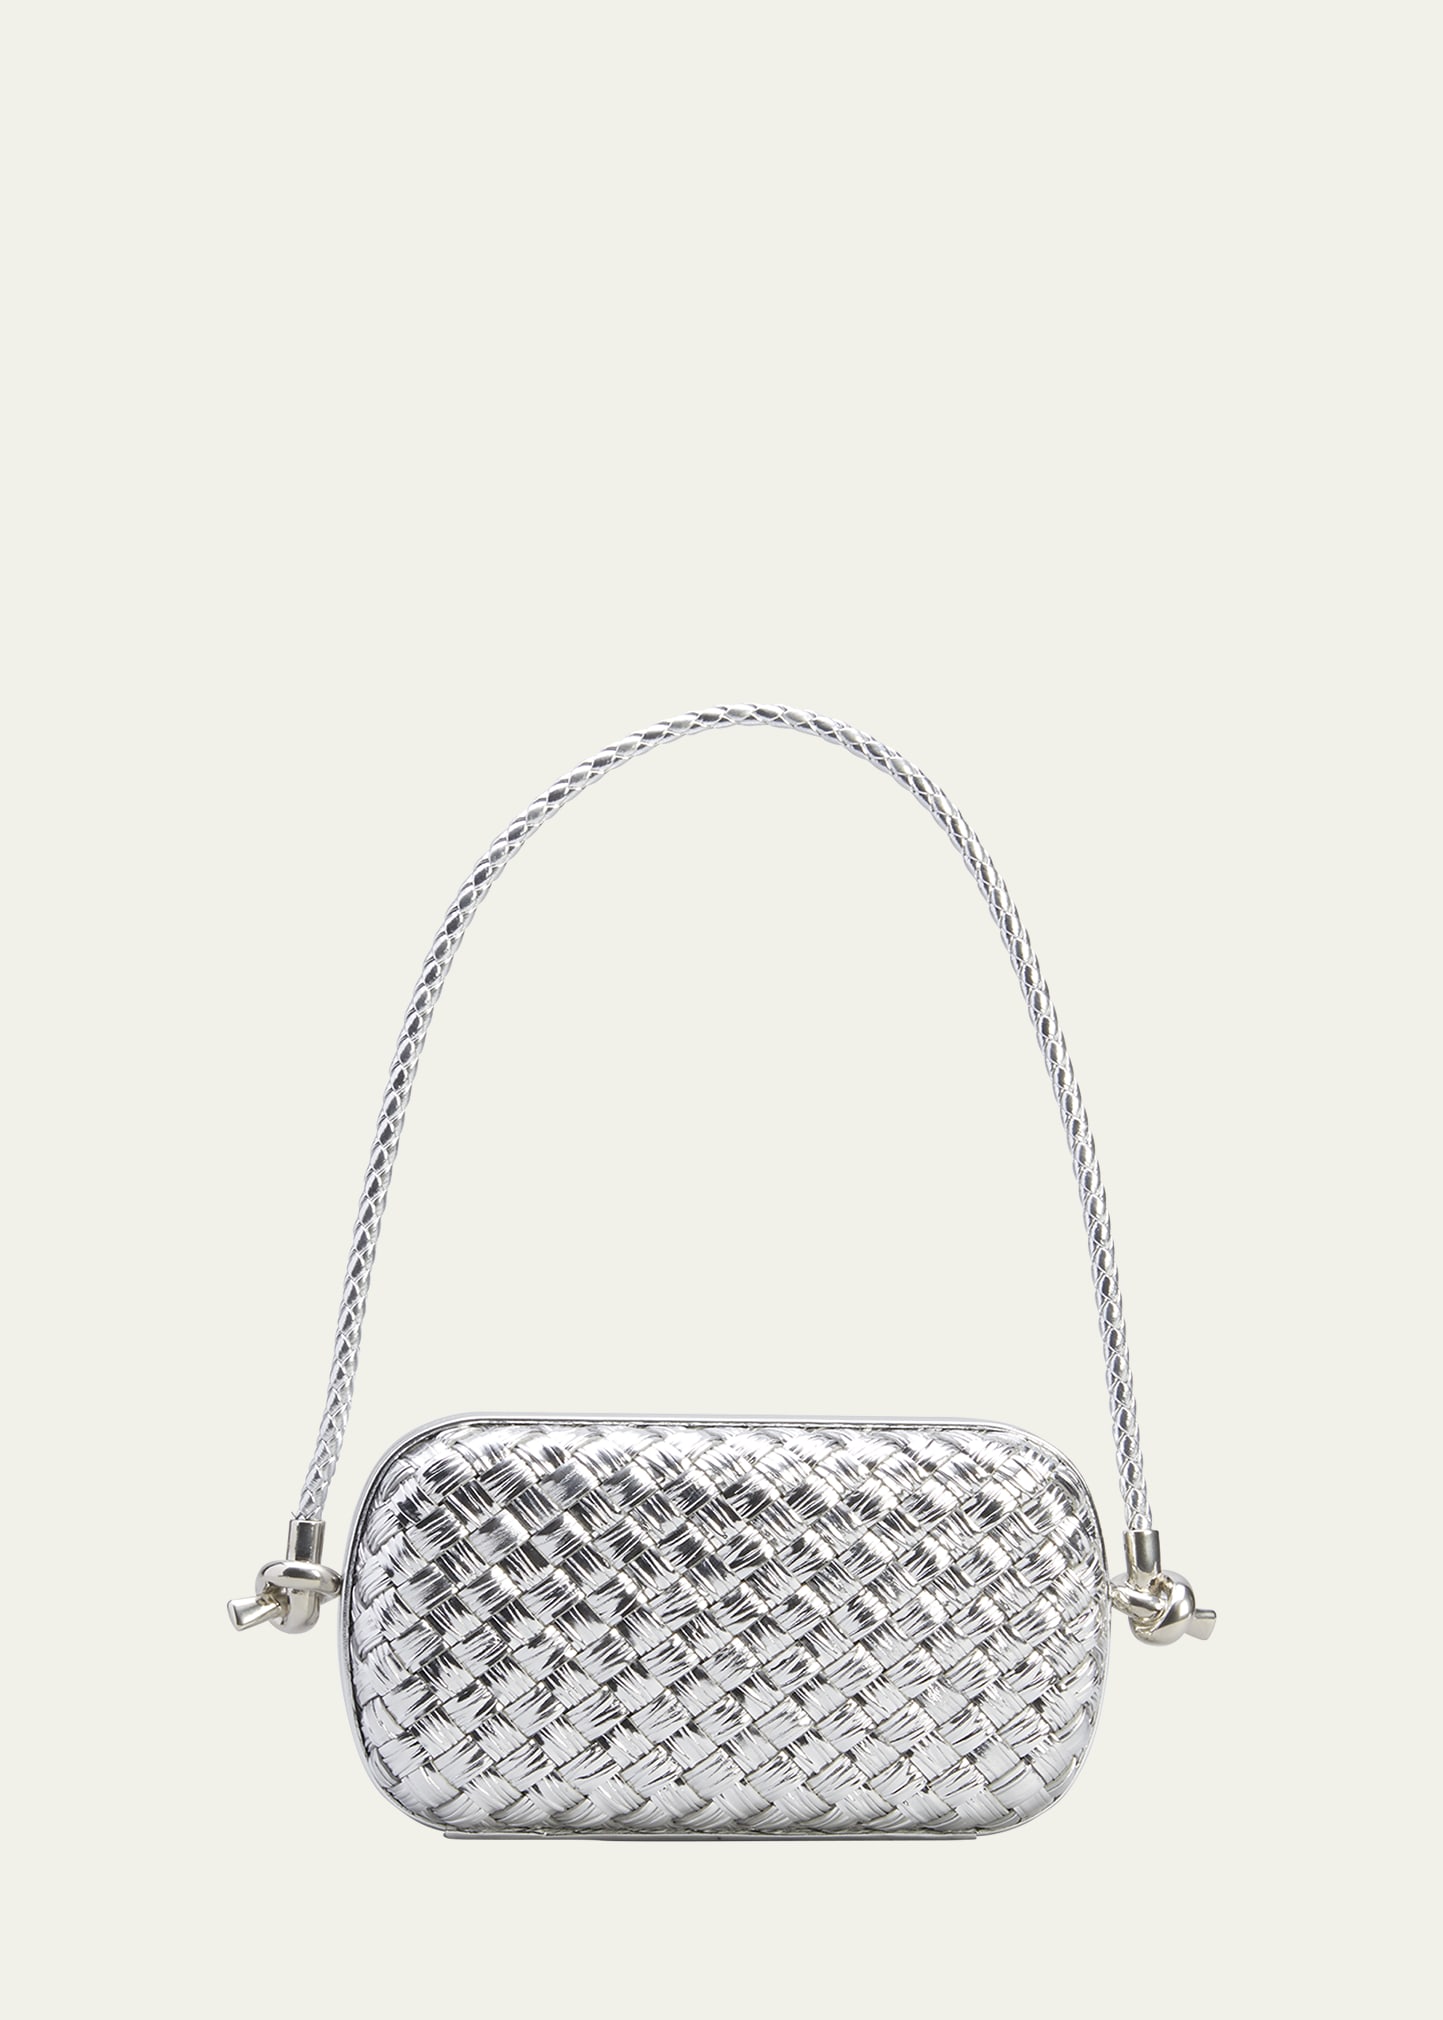 Bottega Veneta® Knot On Strap in Silver. Shop online now.